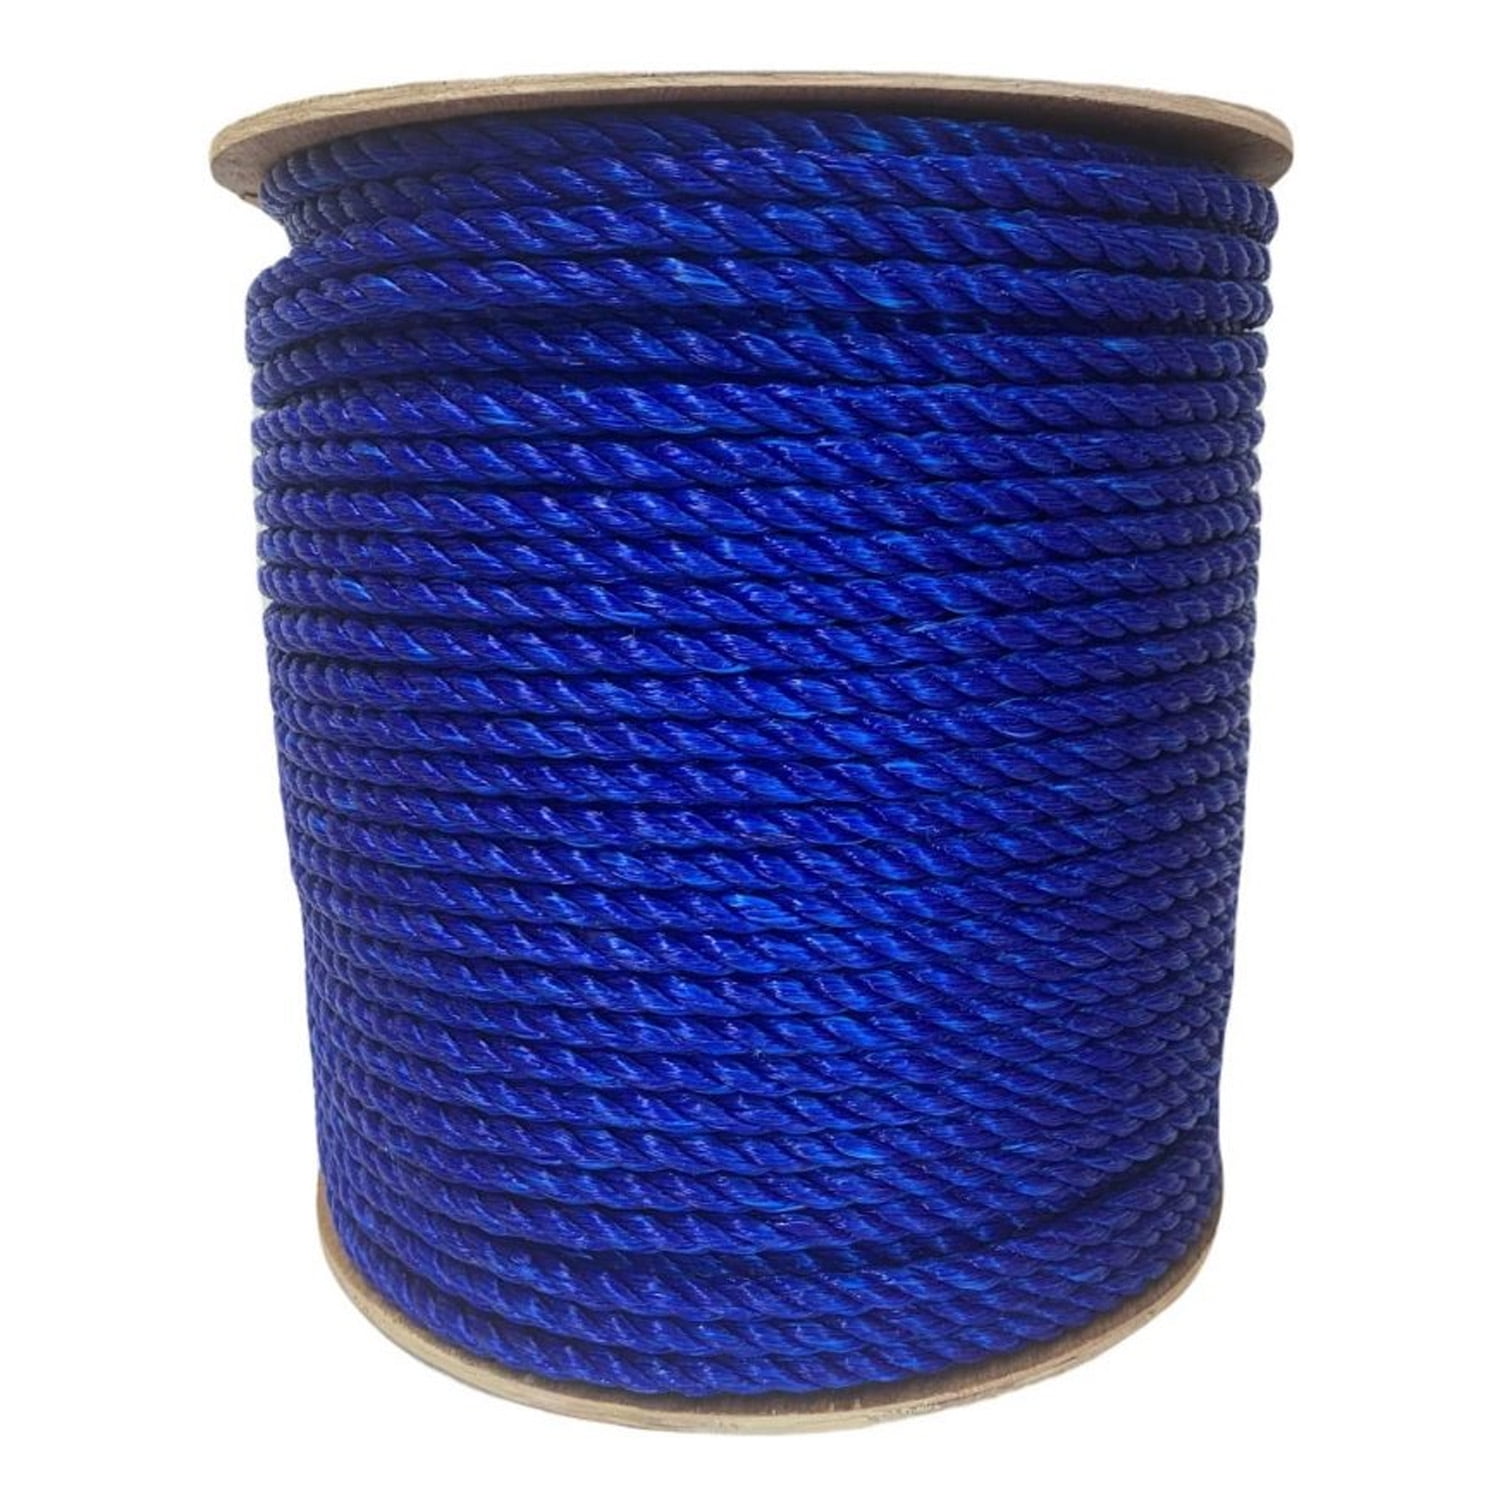 ATERET Twisted 3-Strand Blue Polypropylene Rope Monofilament I 3/8